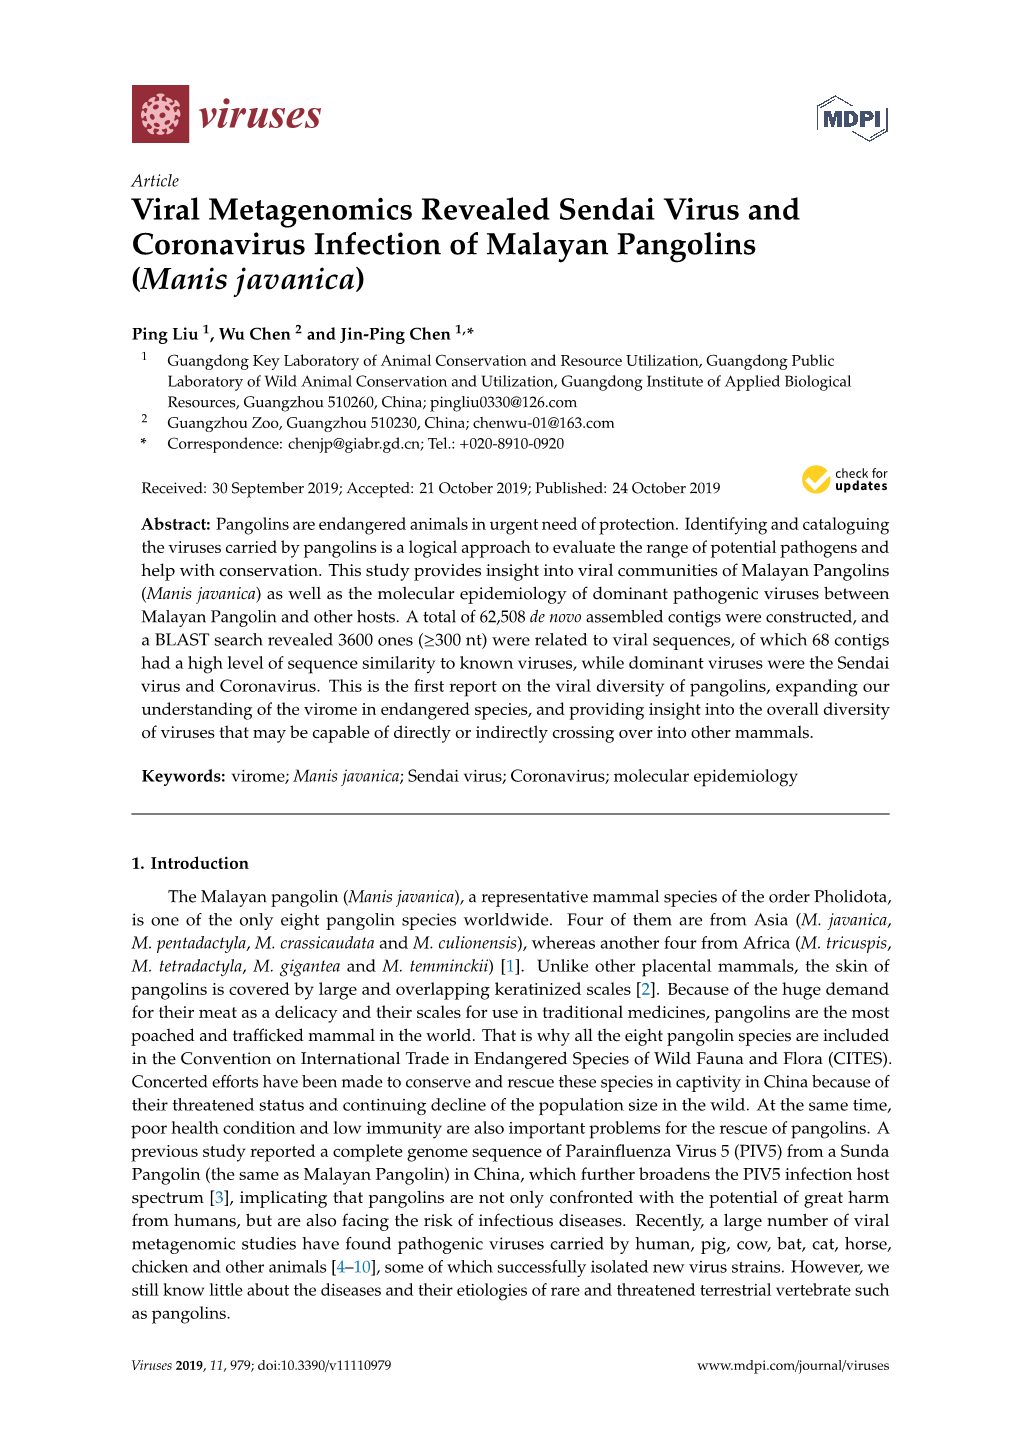 Viral Metagenomics Revealed Sendai Virus and Coronavirus Infection of Malayan Pangolins (Manis Javanica)